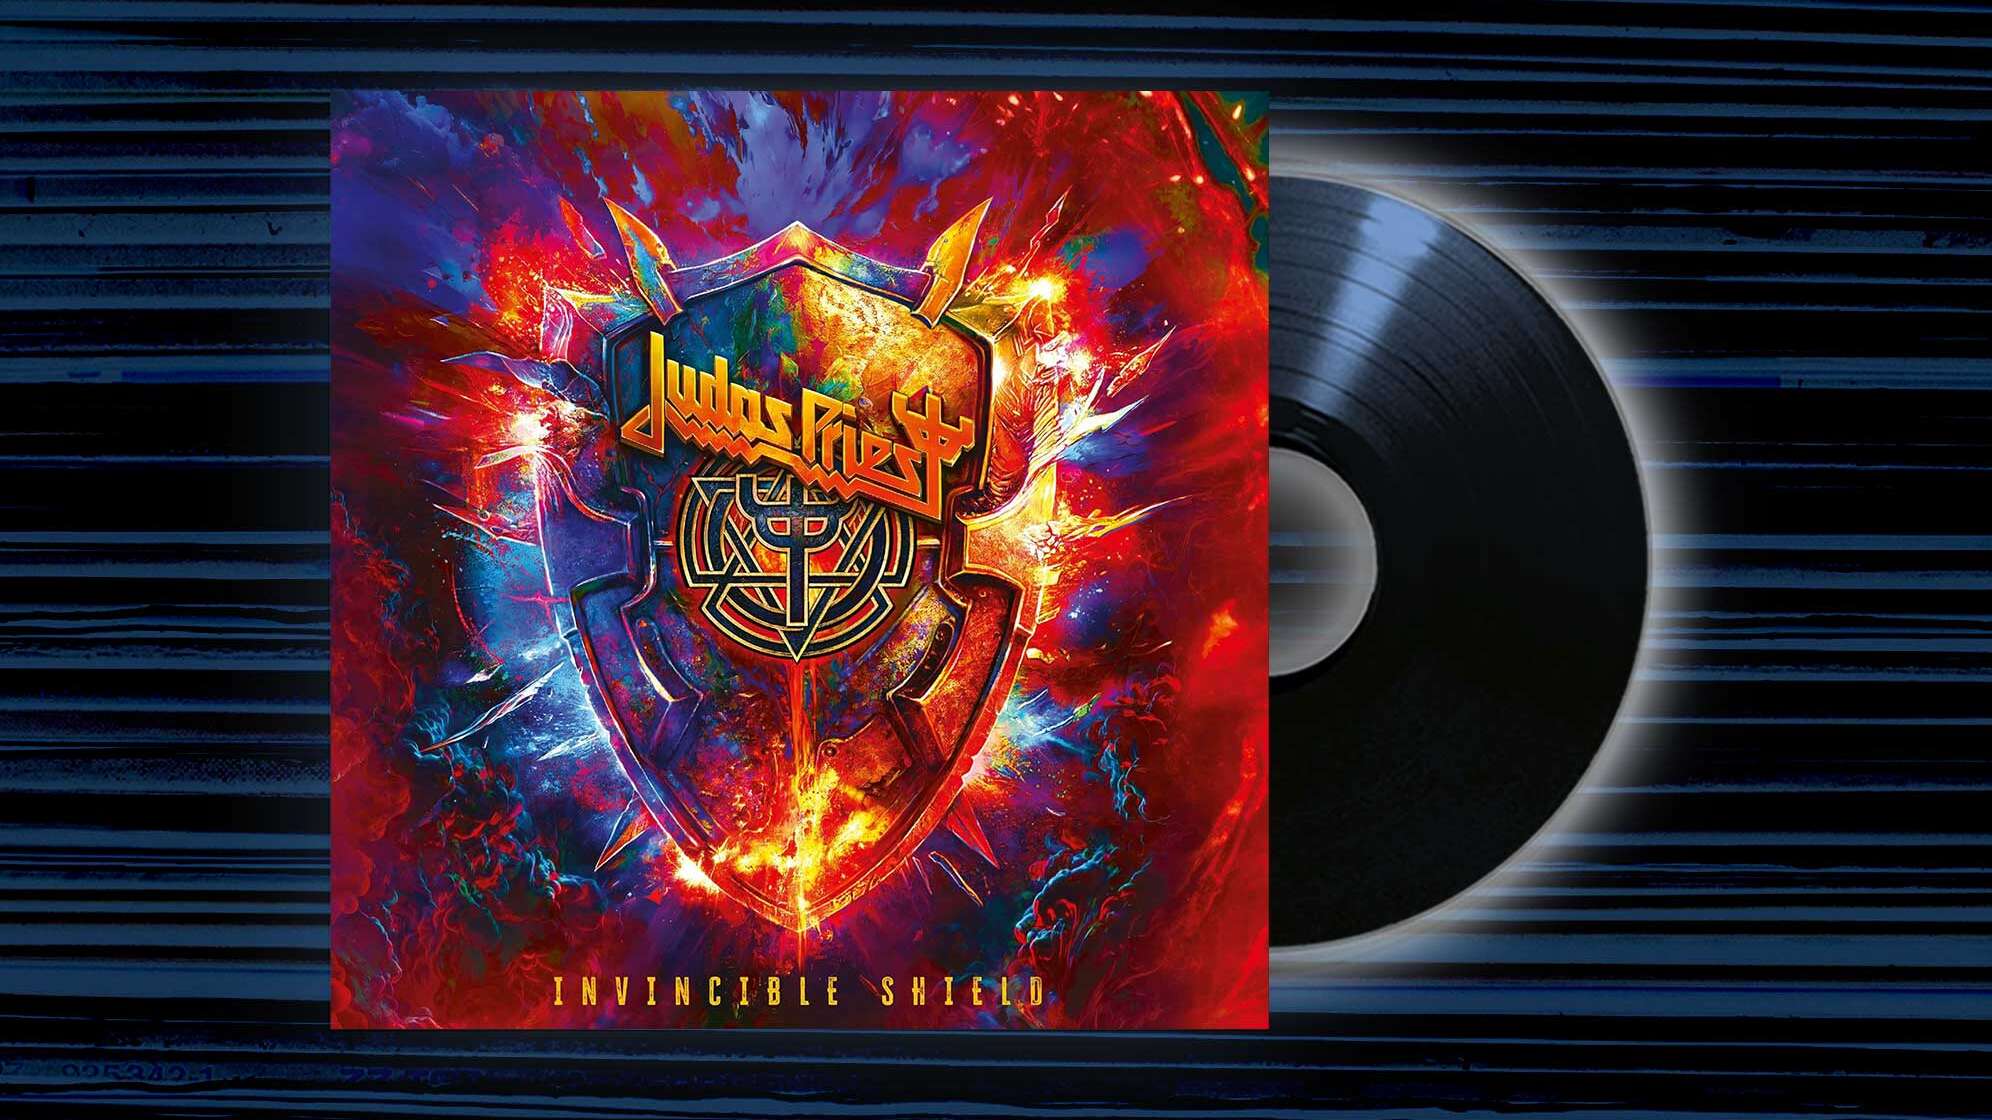 Das Albumcover von Judas Priest "Invincible Shield"